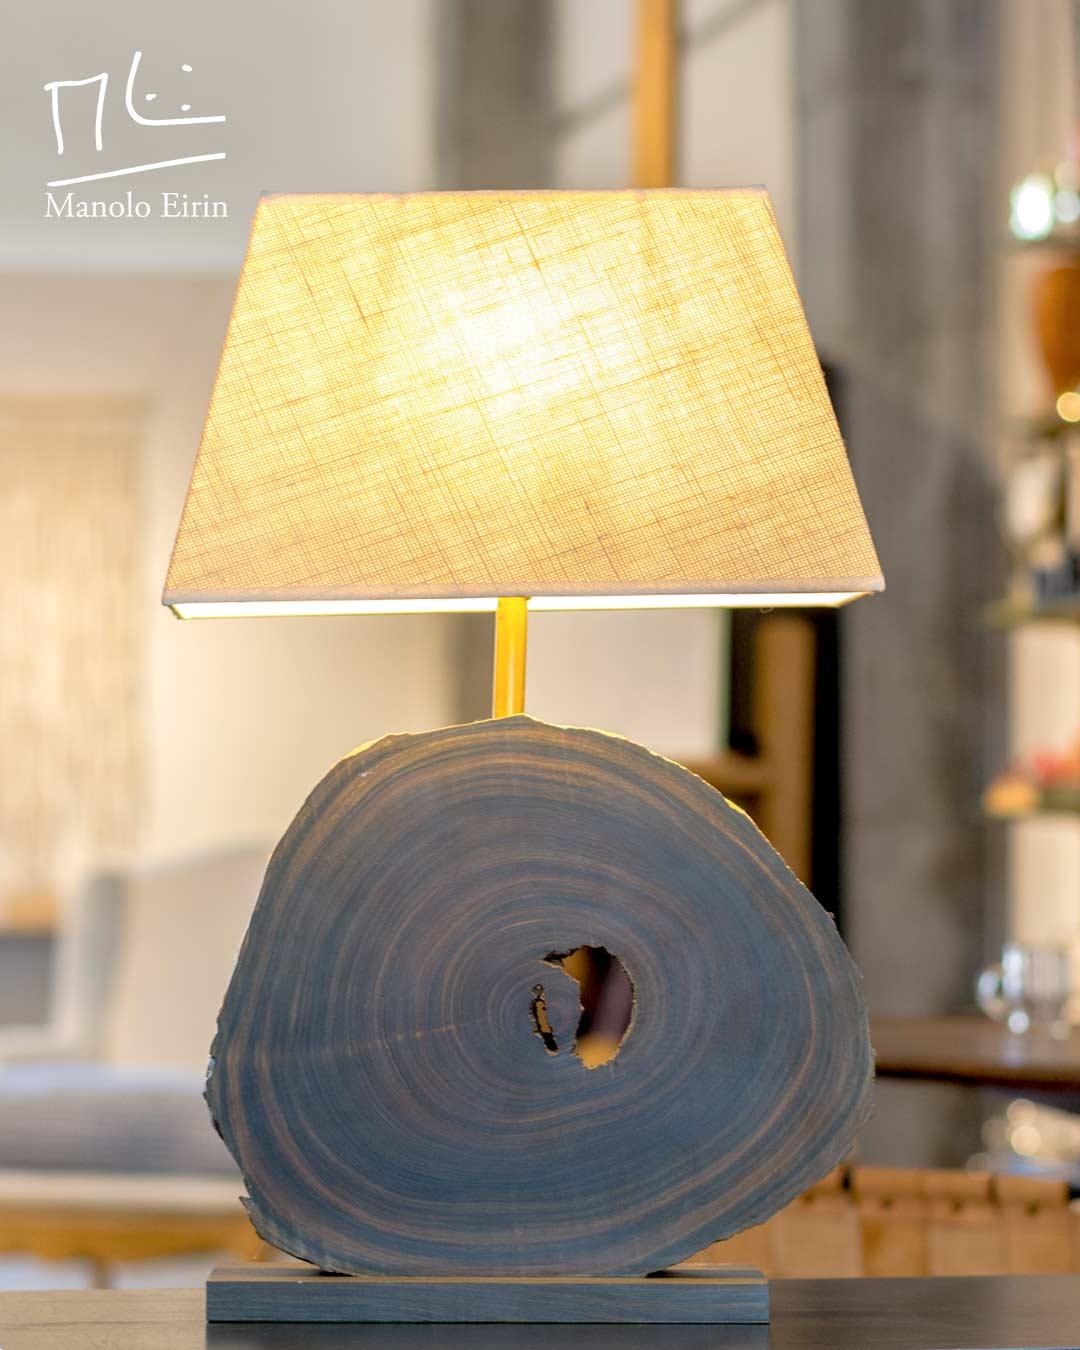 Spanish Handmade Manolo Eirin Table Lamp in Palo Santo Wood, Wabi Sabi Home For Sale